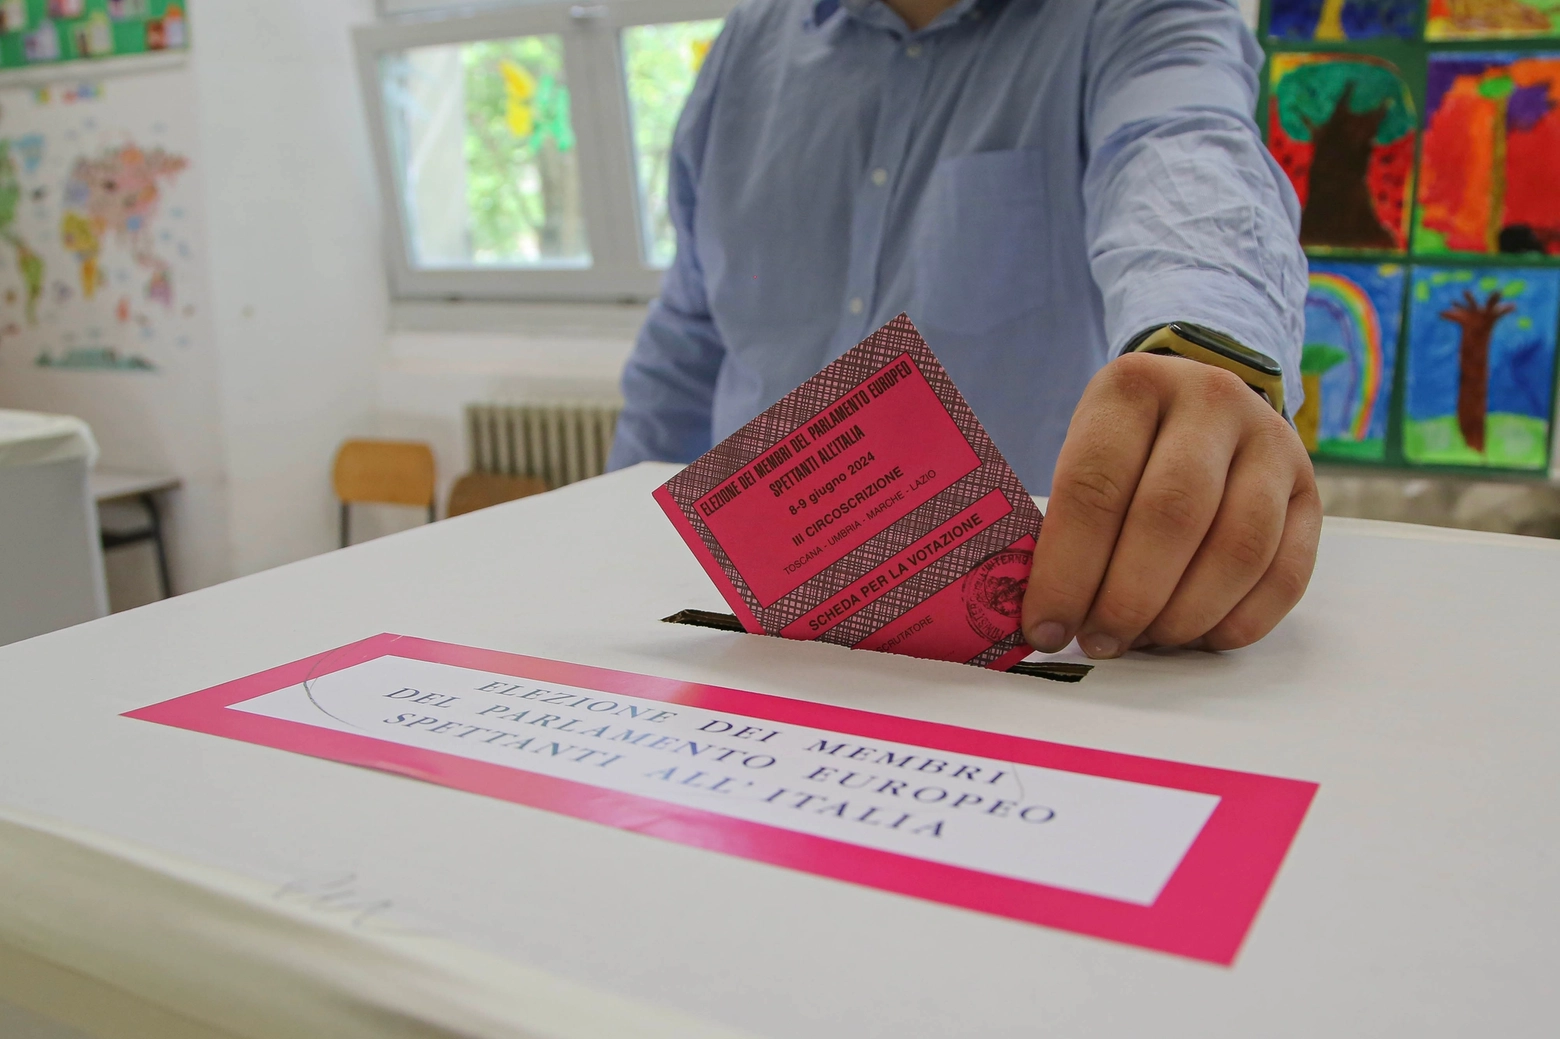 Una sezione elettorale a Perugia (foto Crocchioni)